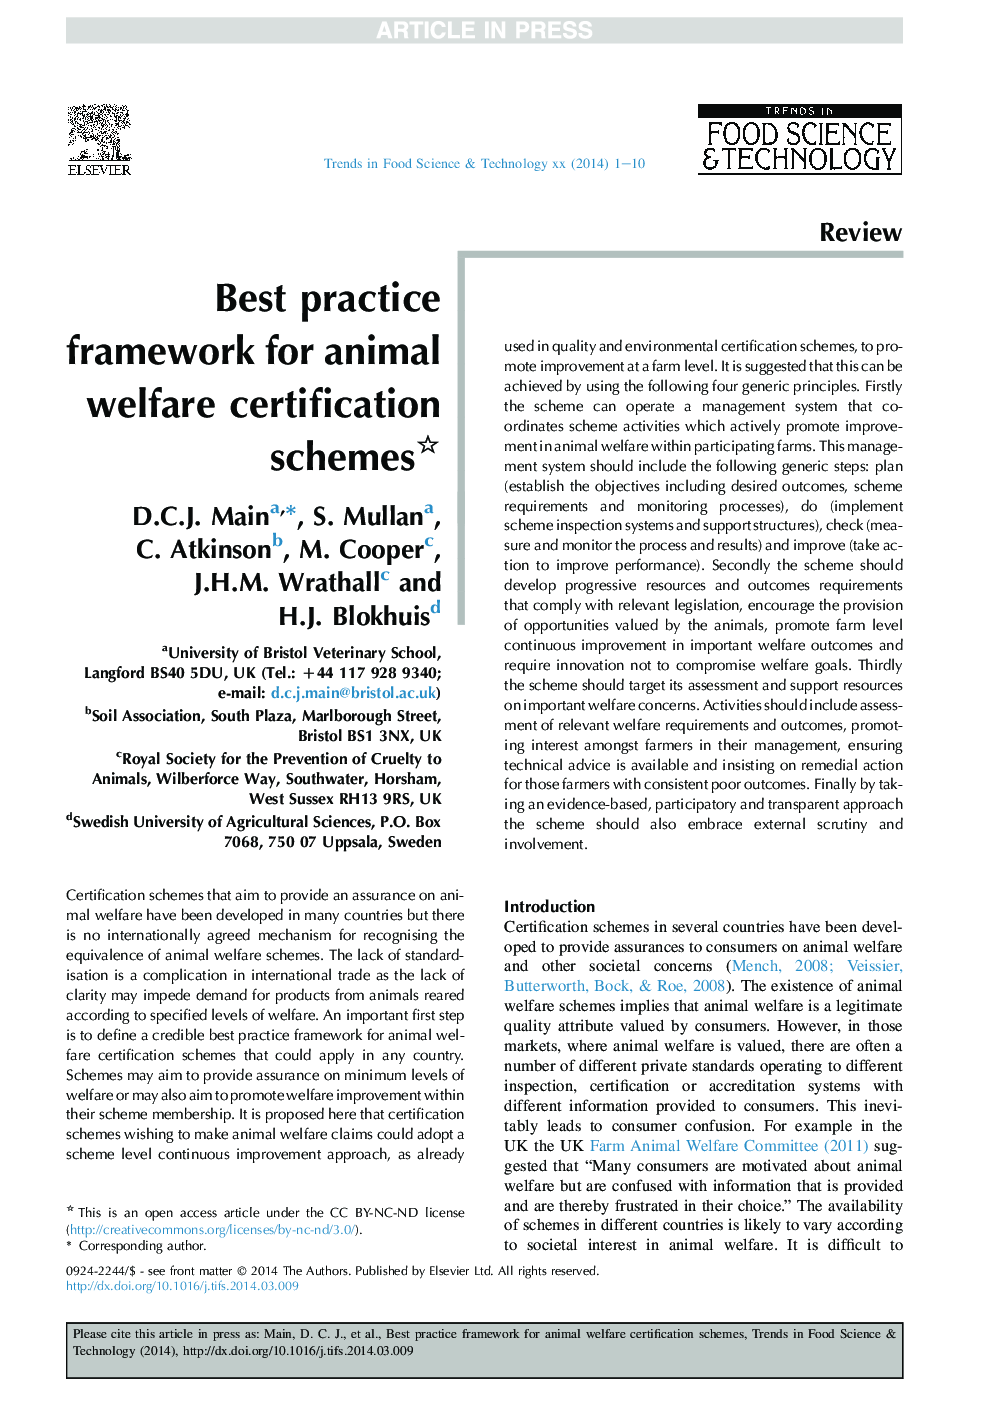 Best practice framework for animal welfare certification schemes